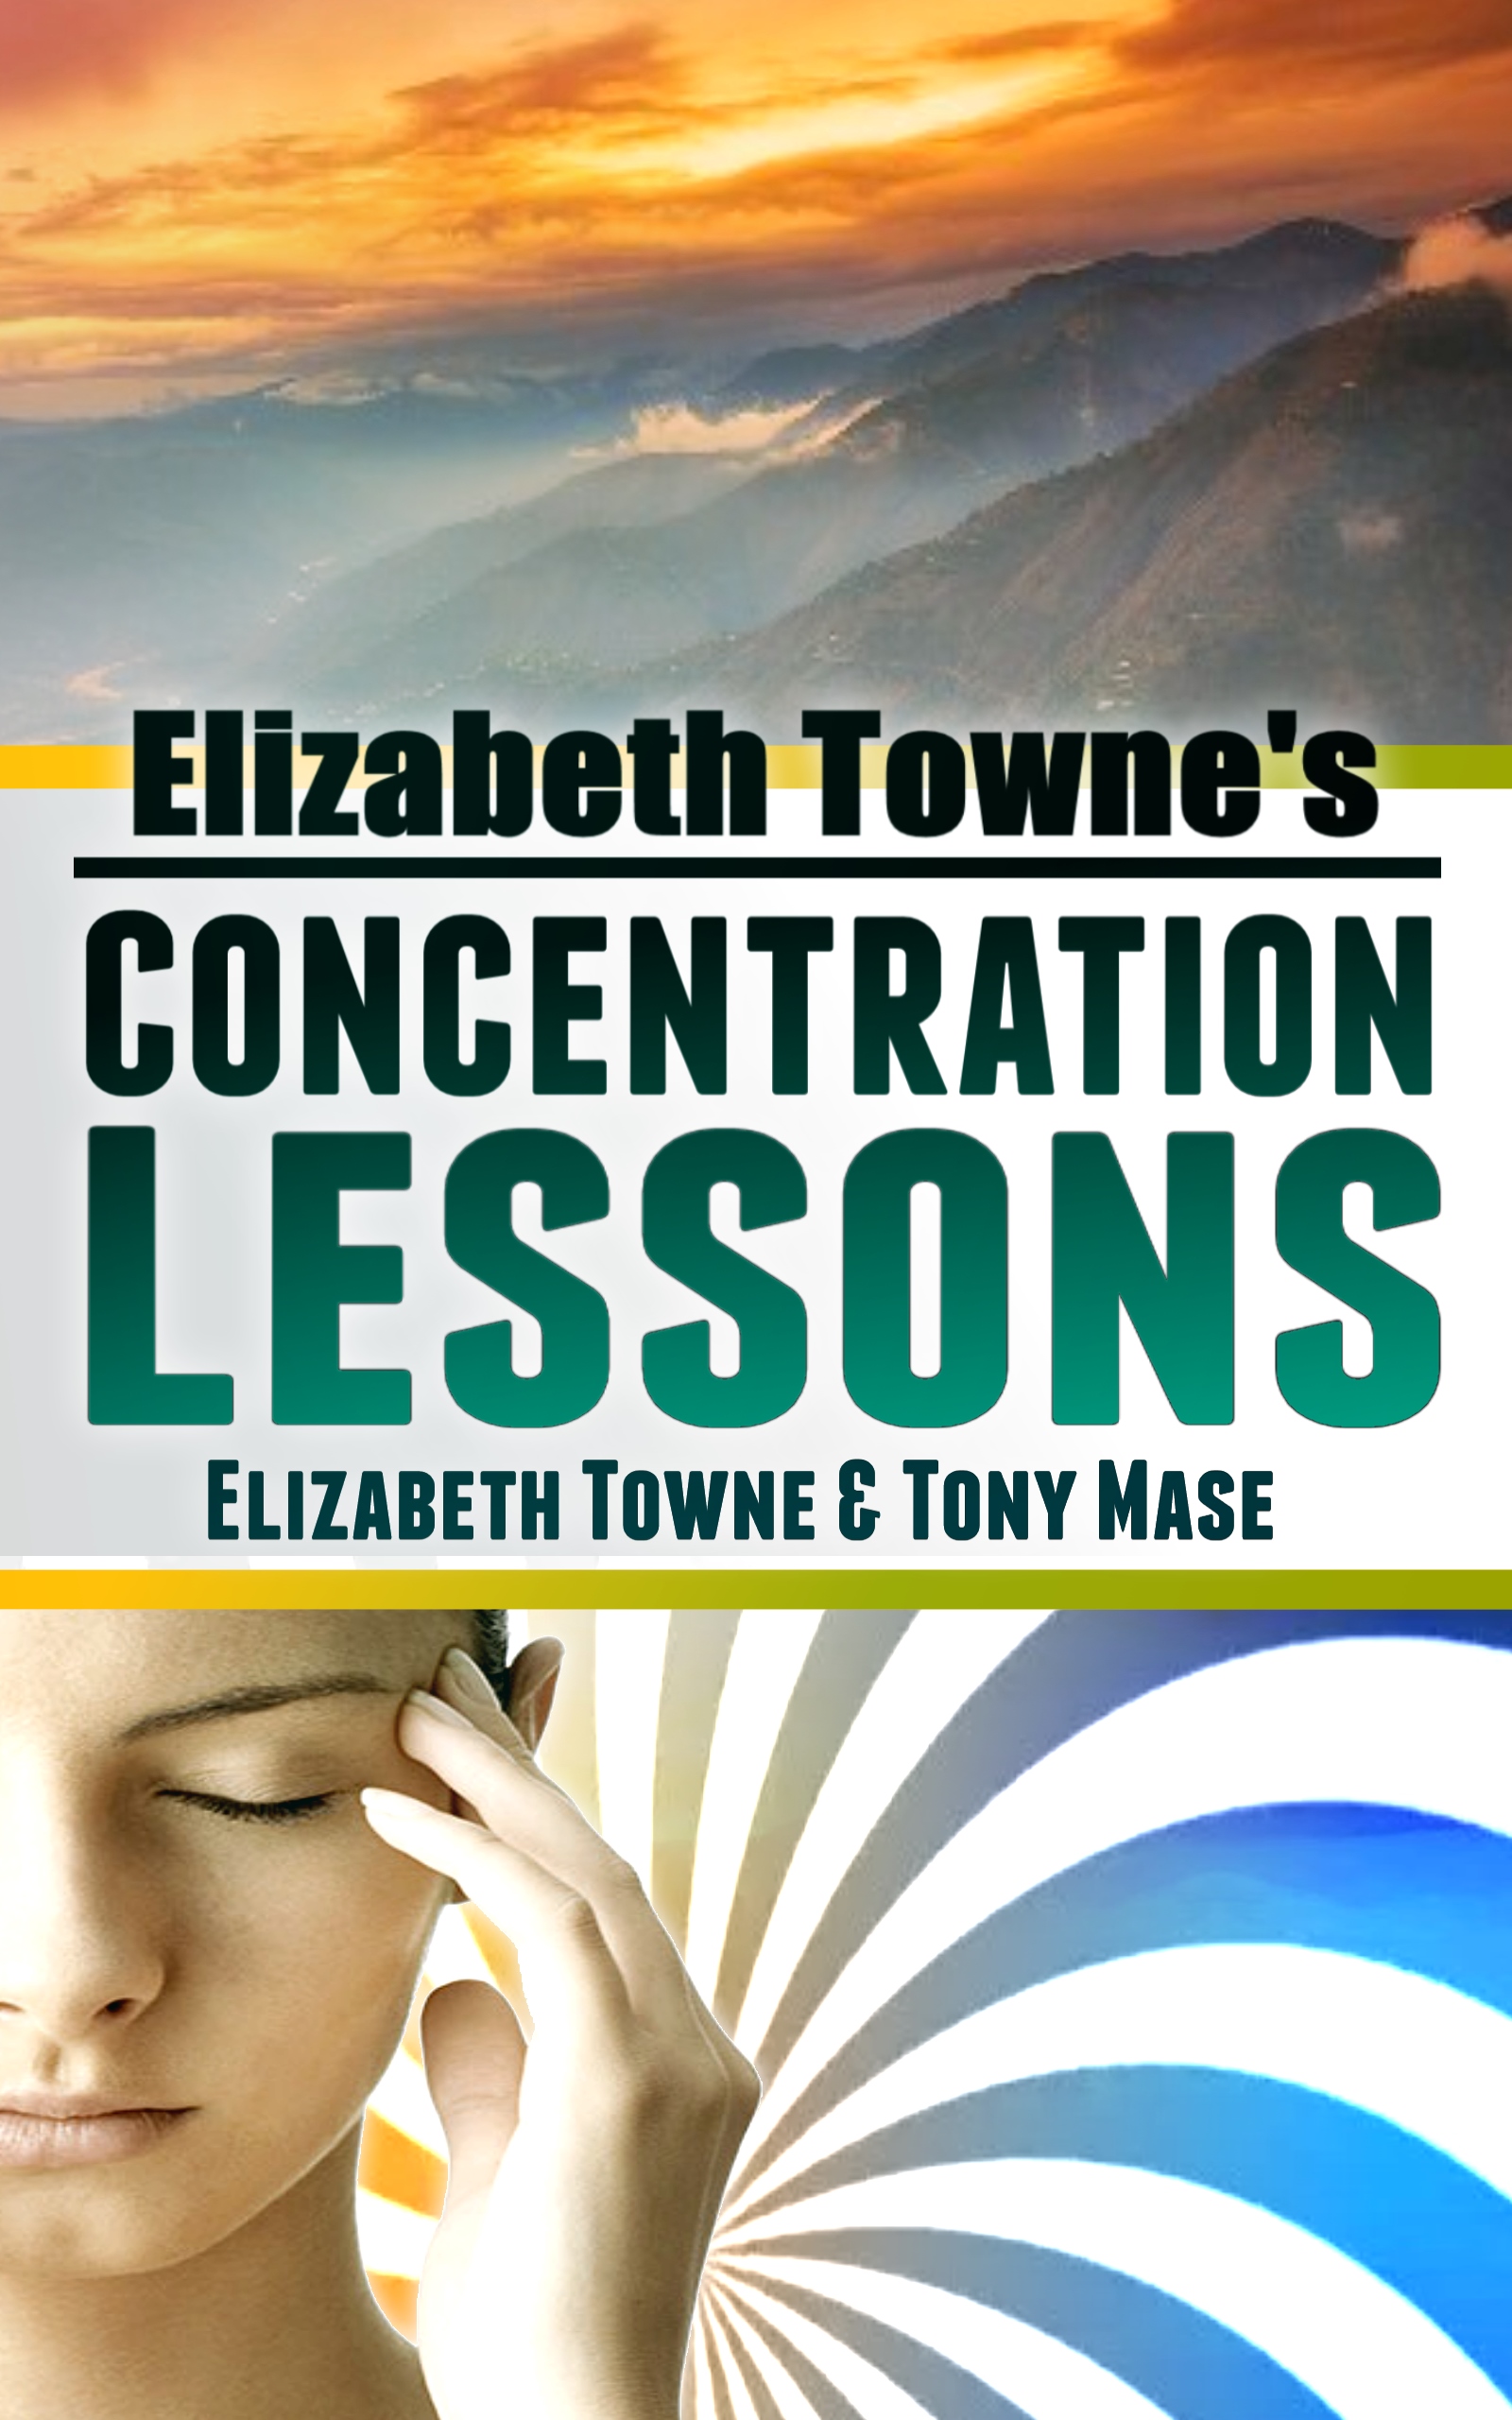 FREE: Elizabeth Towne’s Concentration Lessons by Elizabeth Towne